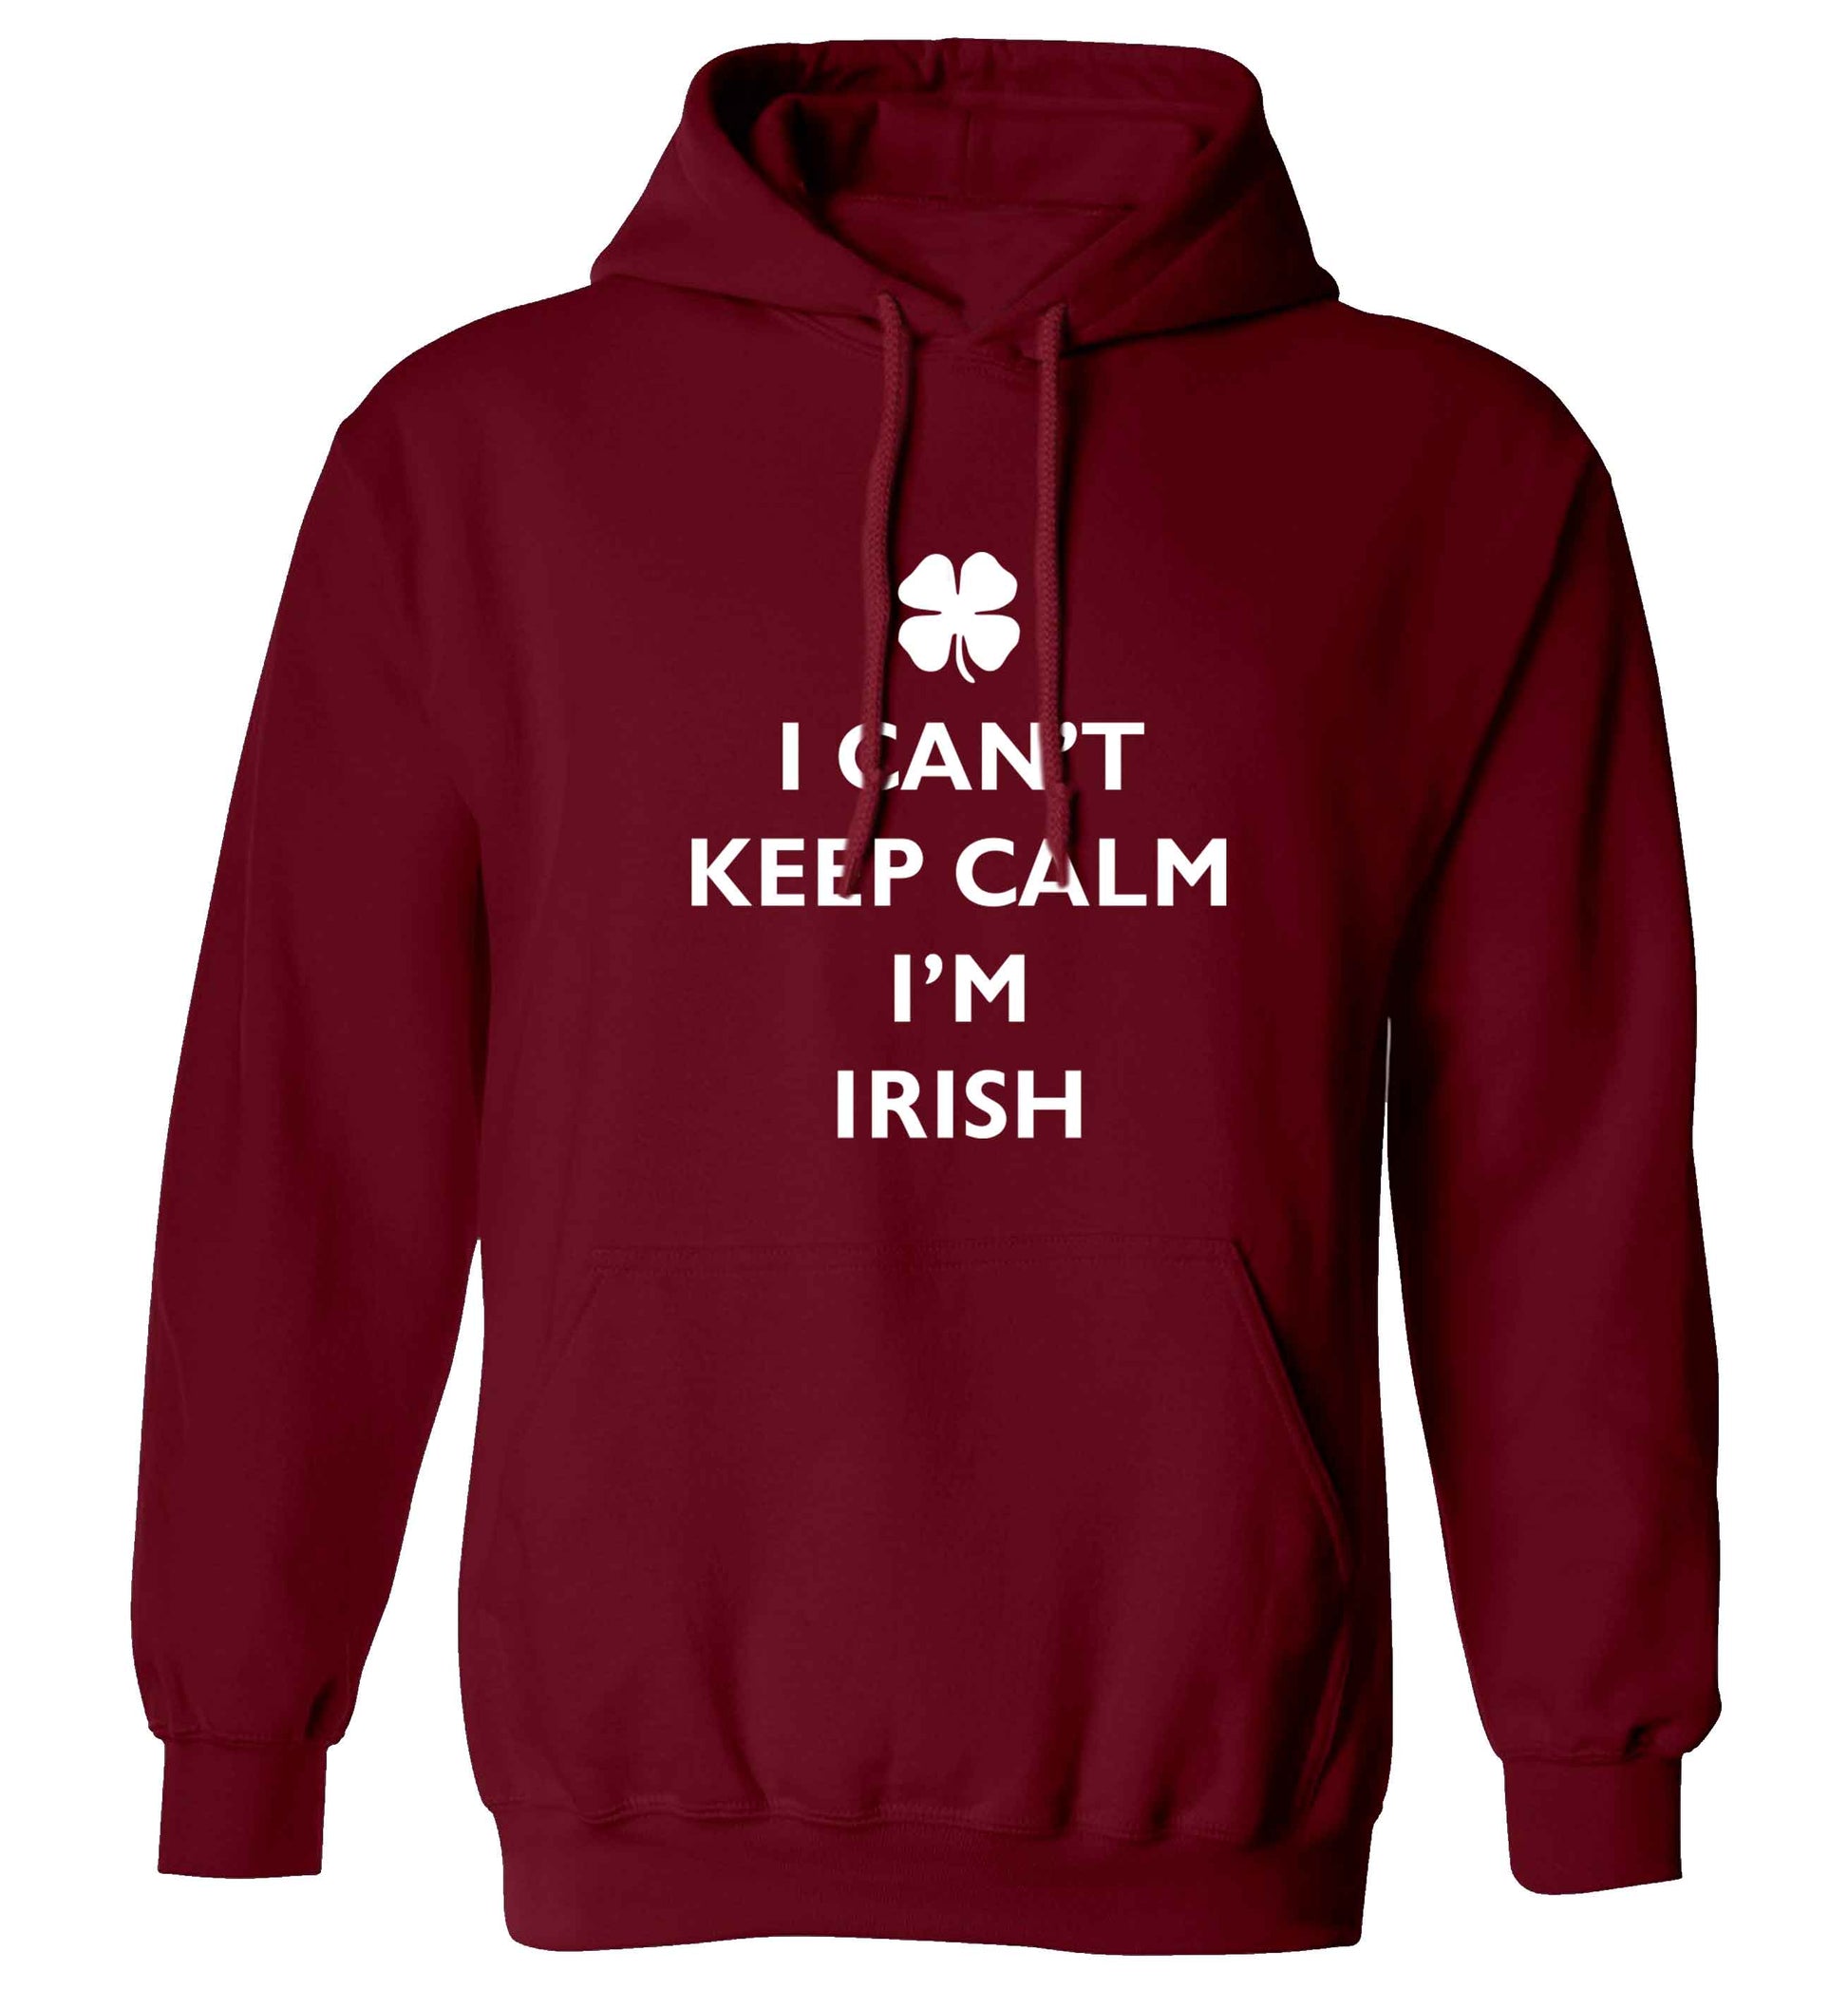 I can't keep calm I'm Irish adults unisex maroon hoodie 2XL